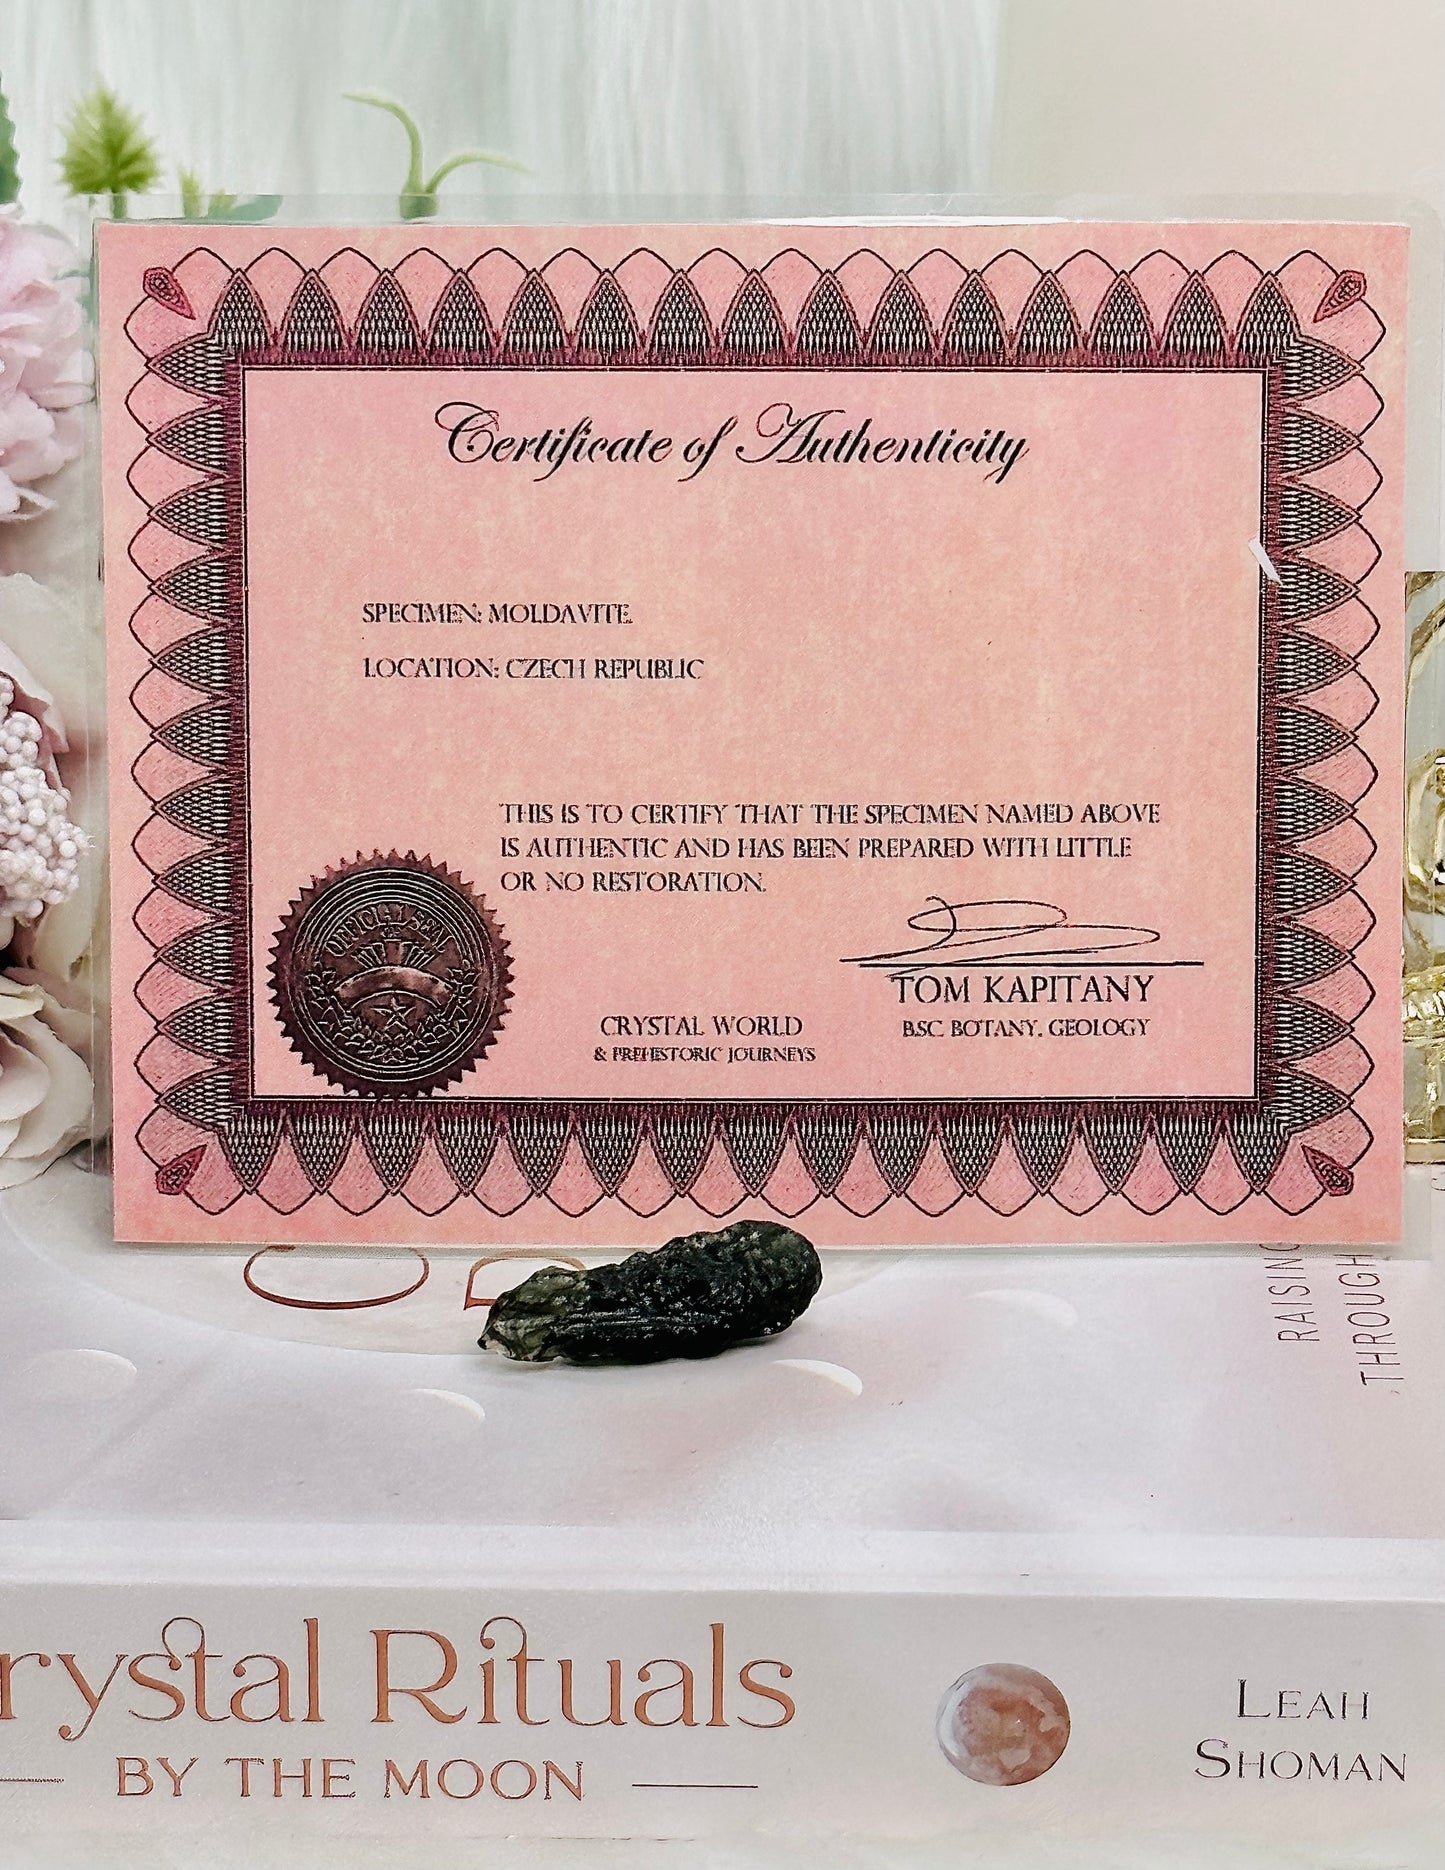 A Precious Rare Tektite ~ Incredible 4.2gram Natural Moldavite Tektite with Authenticity Certificate